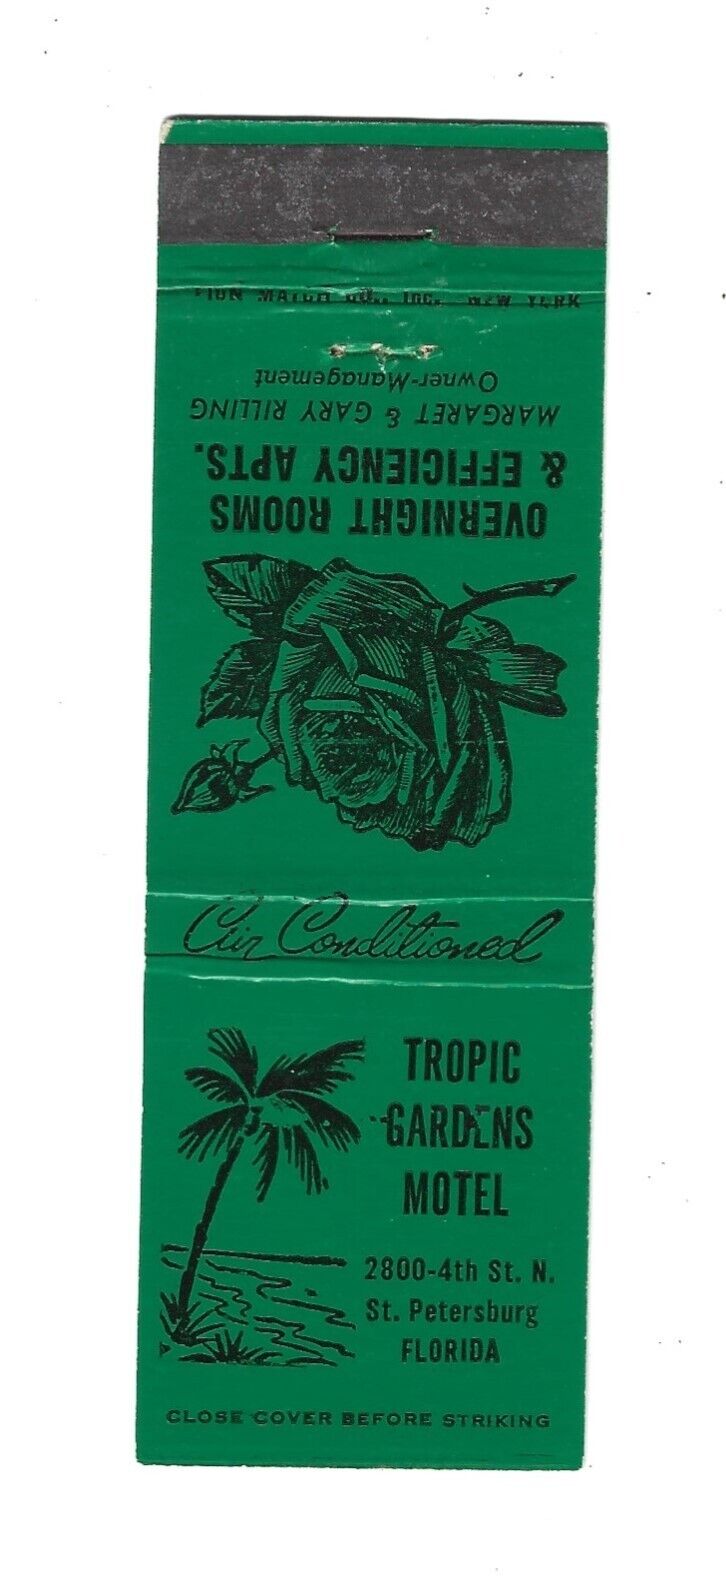 Tropic Gardens Motel - St. Petersburg, FL   Matchcover   Margaret & Gary Rilling